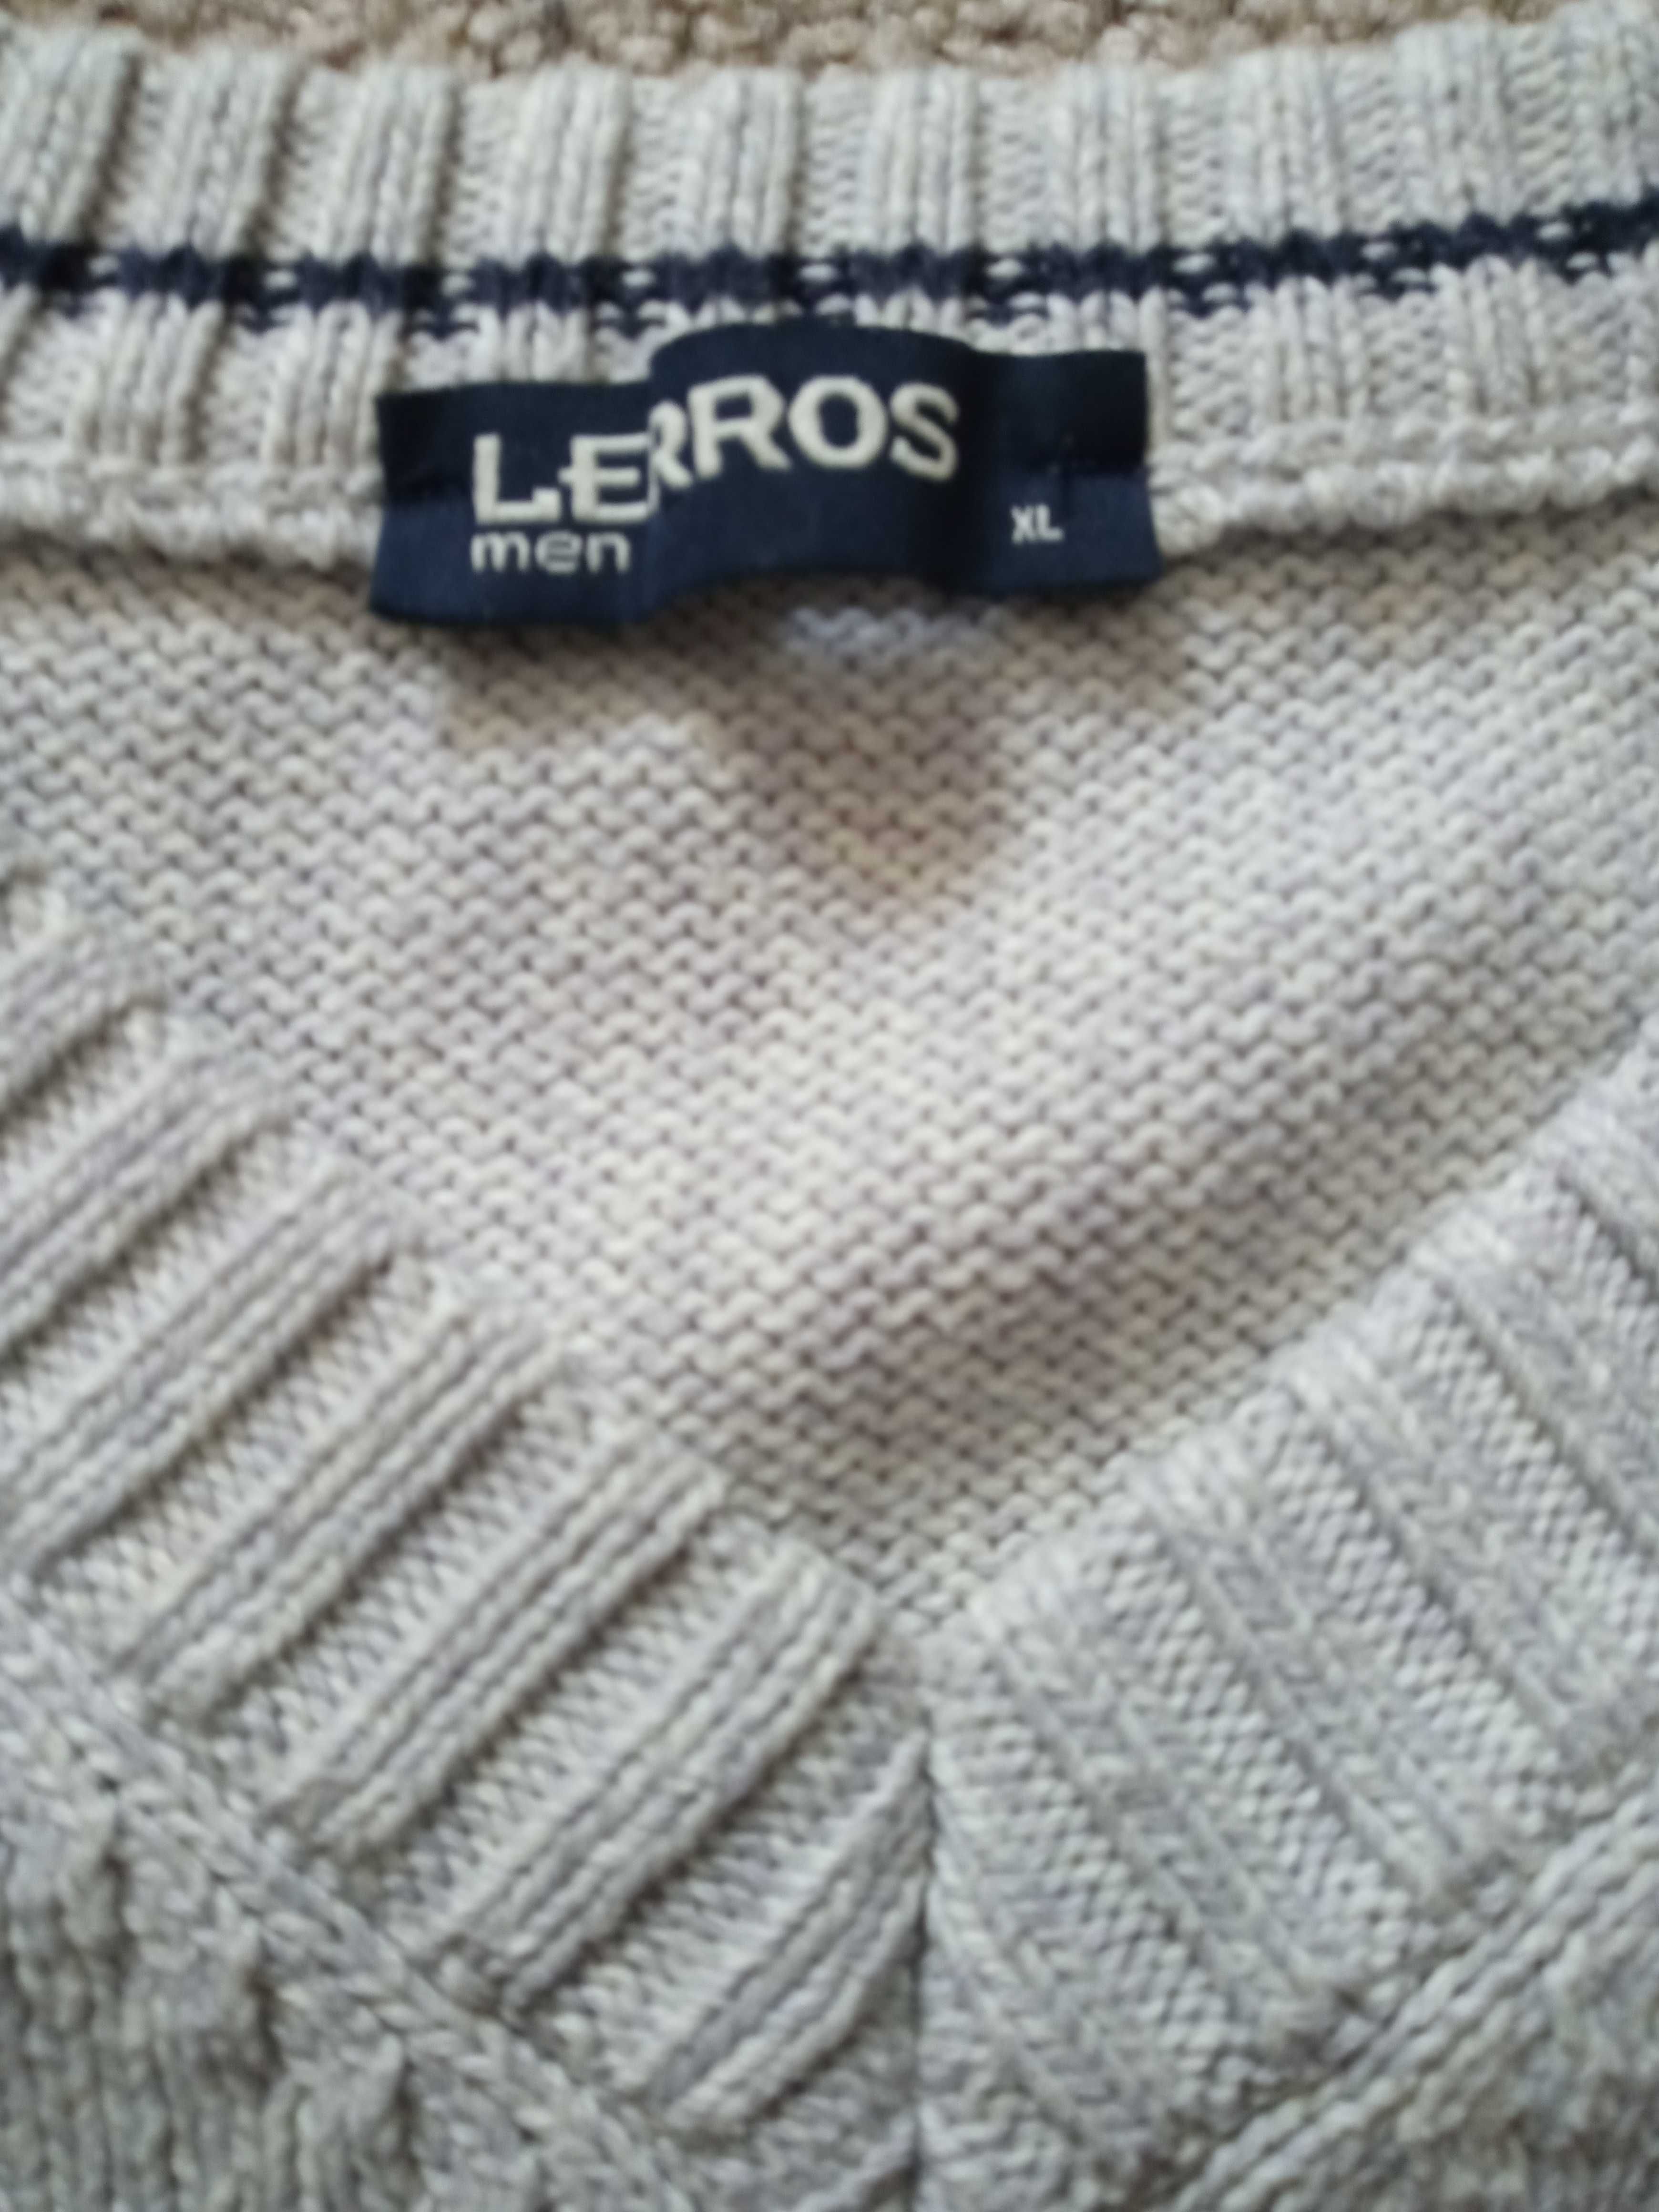 Sweter aLerros men rozmiar XL